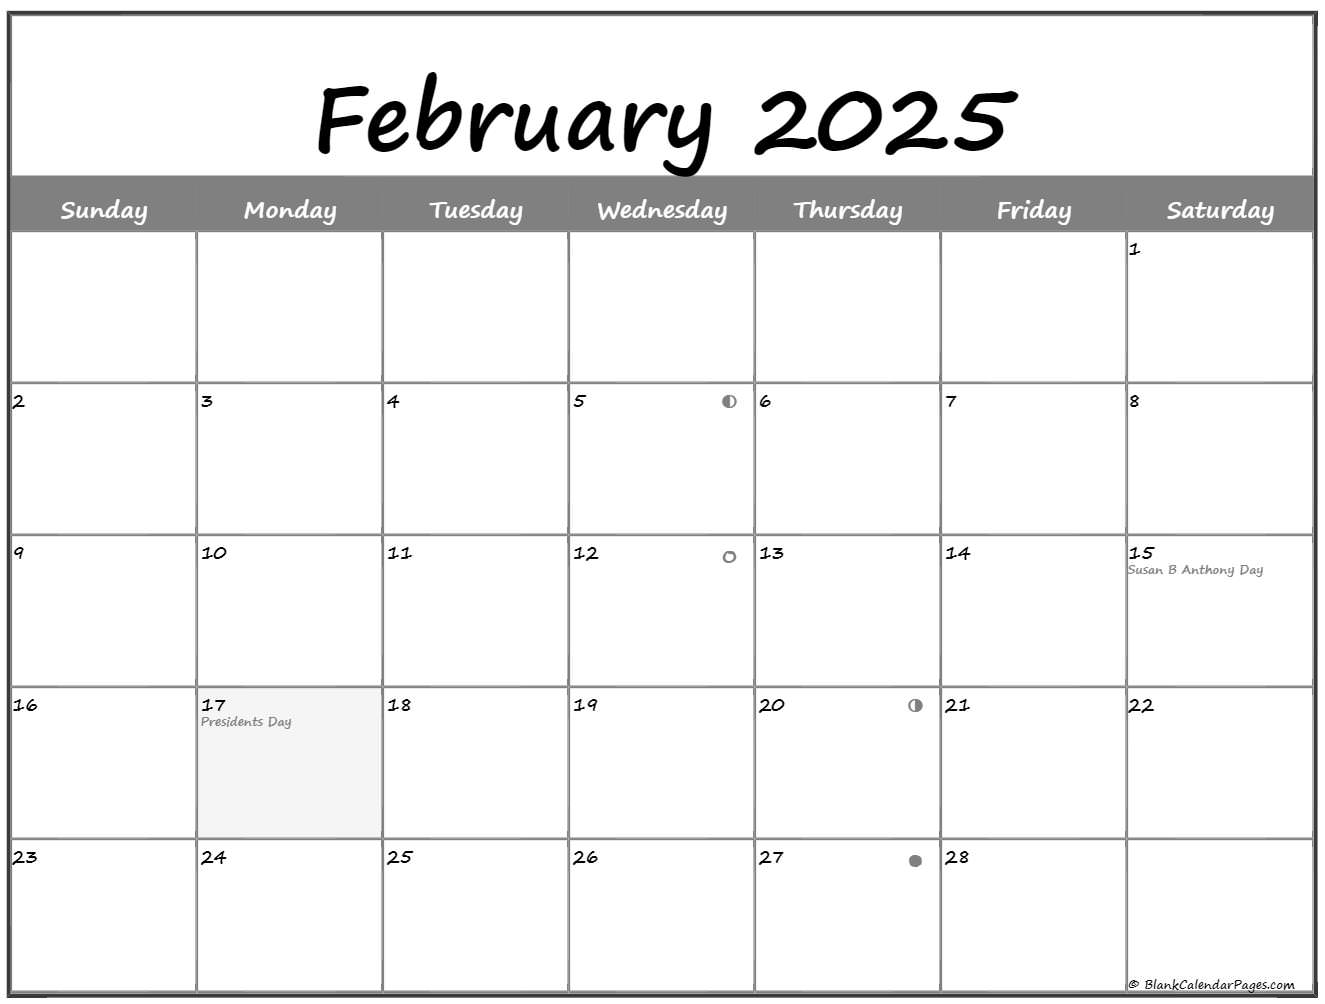 february-2025-lunar-calendar-moon-phase-calendar